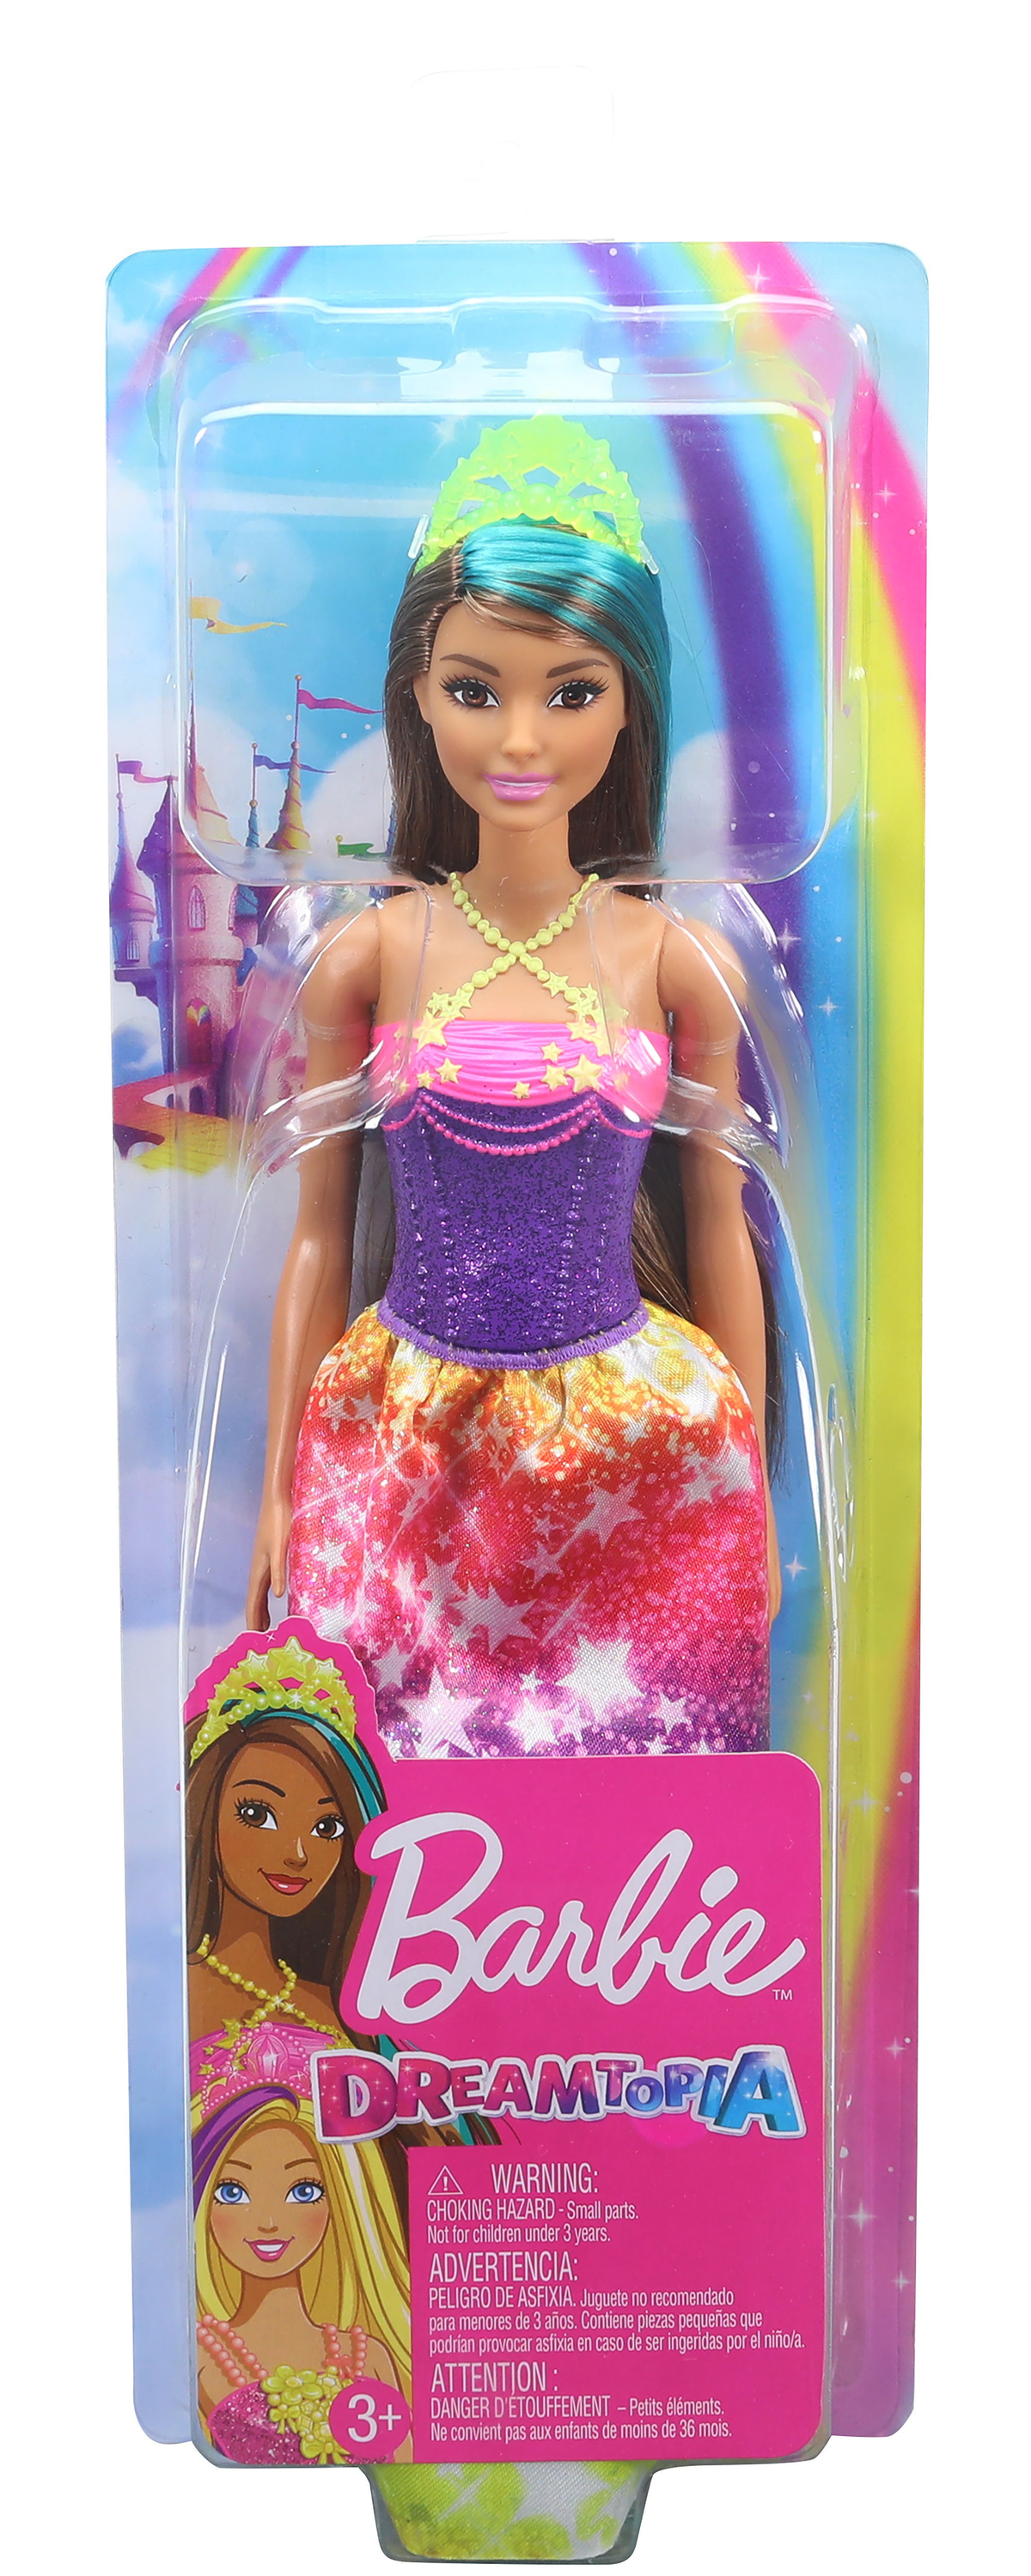 Top GJK14 Falda Dreamtopia Puppe Arcoiris y MATTEL Rosa Barbie Morado